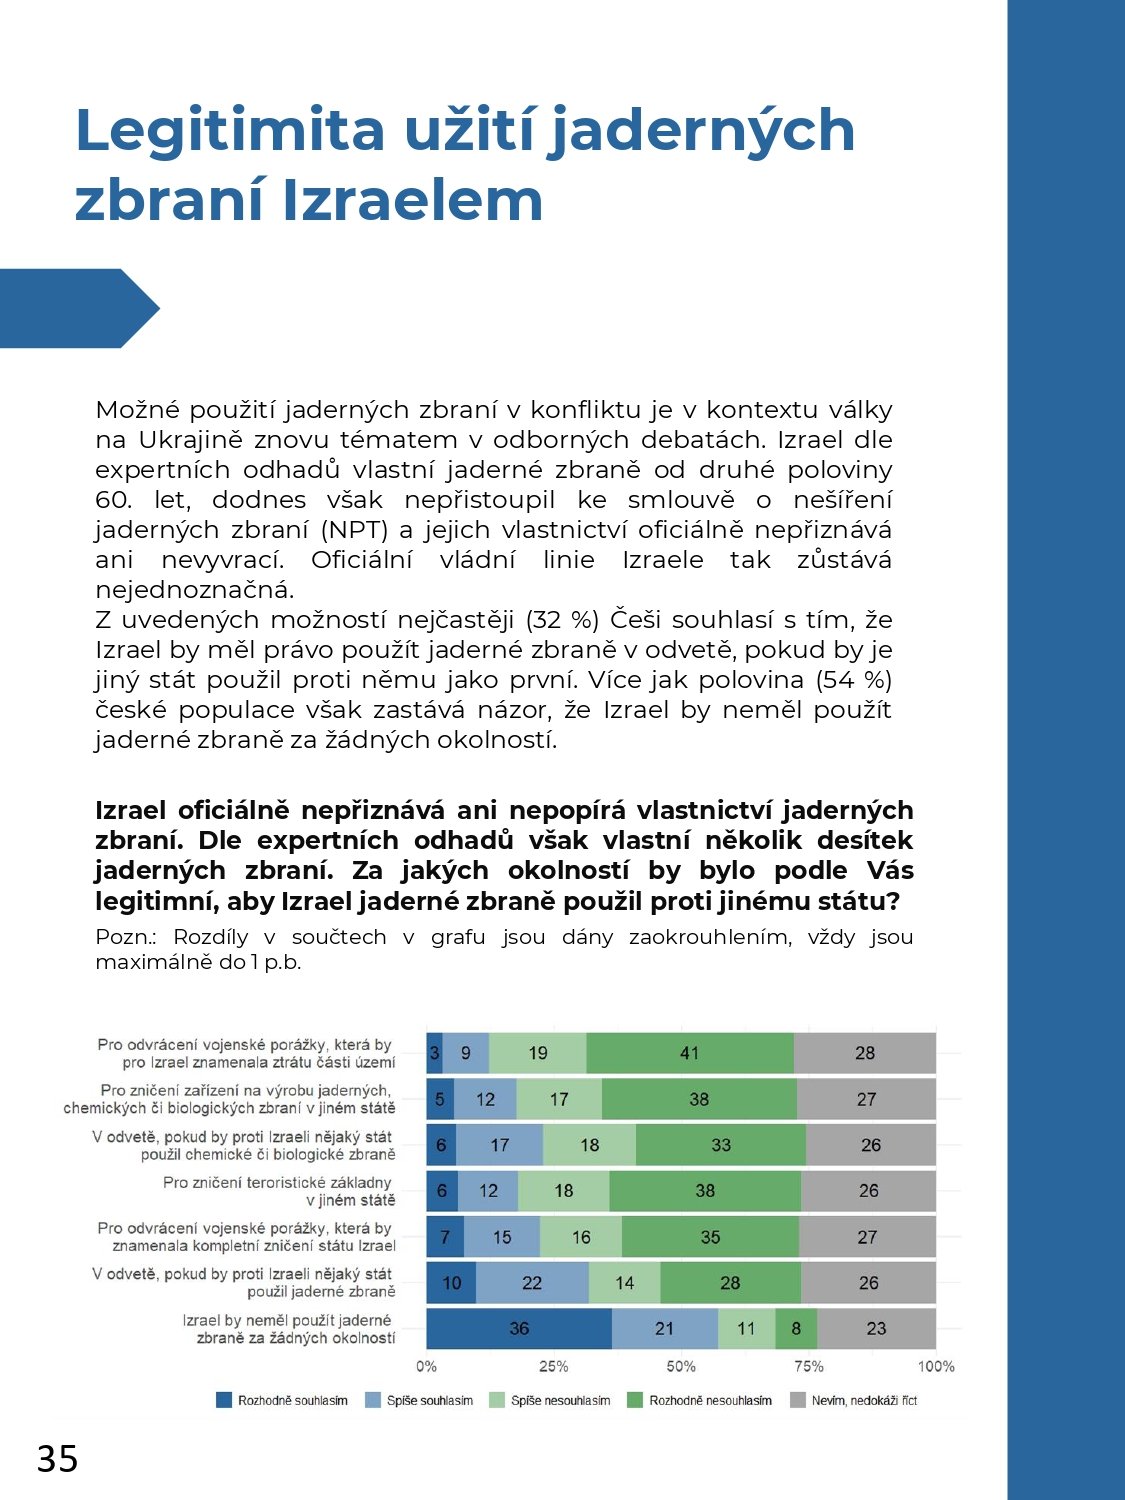 HCIS_PRCP_Public attitudes towards Israel_REPORT_CZ_Finální (2)_pages-to-jpg-0035.jpg